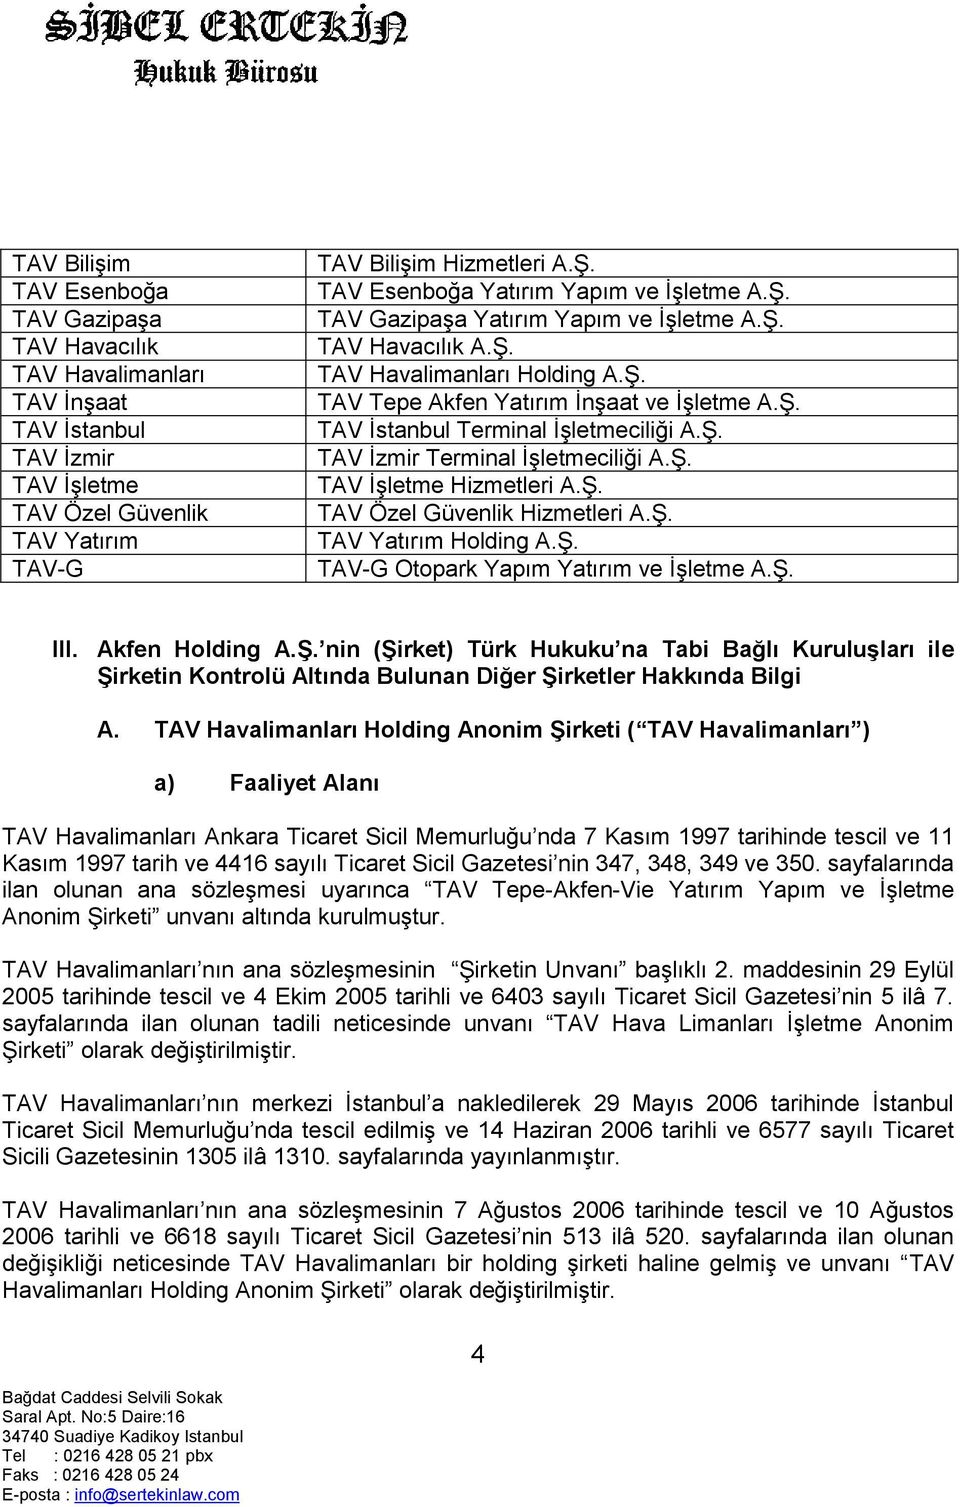 Ş. TAV İzmir Terminal İşletmeciliği A.Ş. TAV İşletme Hizmetleri A.Ş. TAV Özel Güvenlik Hizmetleri A.Ş. TAV Yatırım Holding A.Ş. TAV-G Otopark Yapım Yatırım ve İşletme A.Ş. III. Akfen Holding A.ġ.